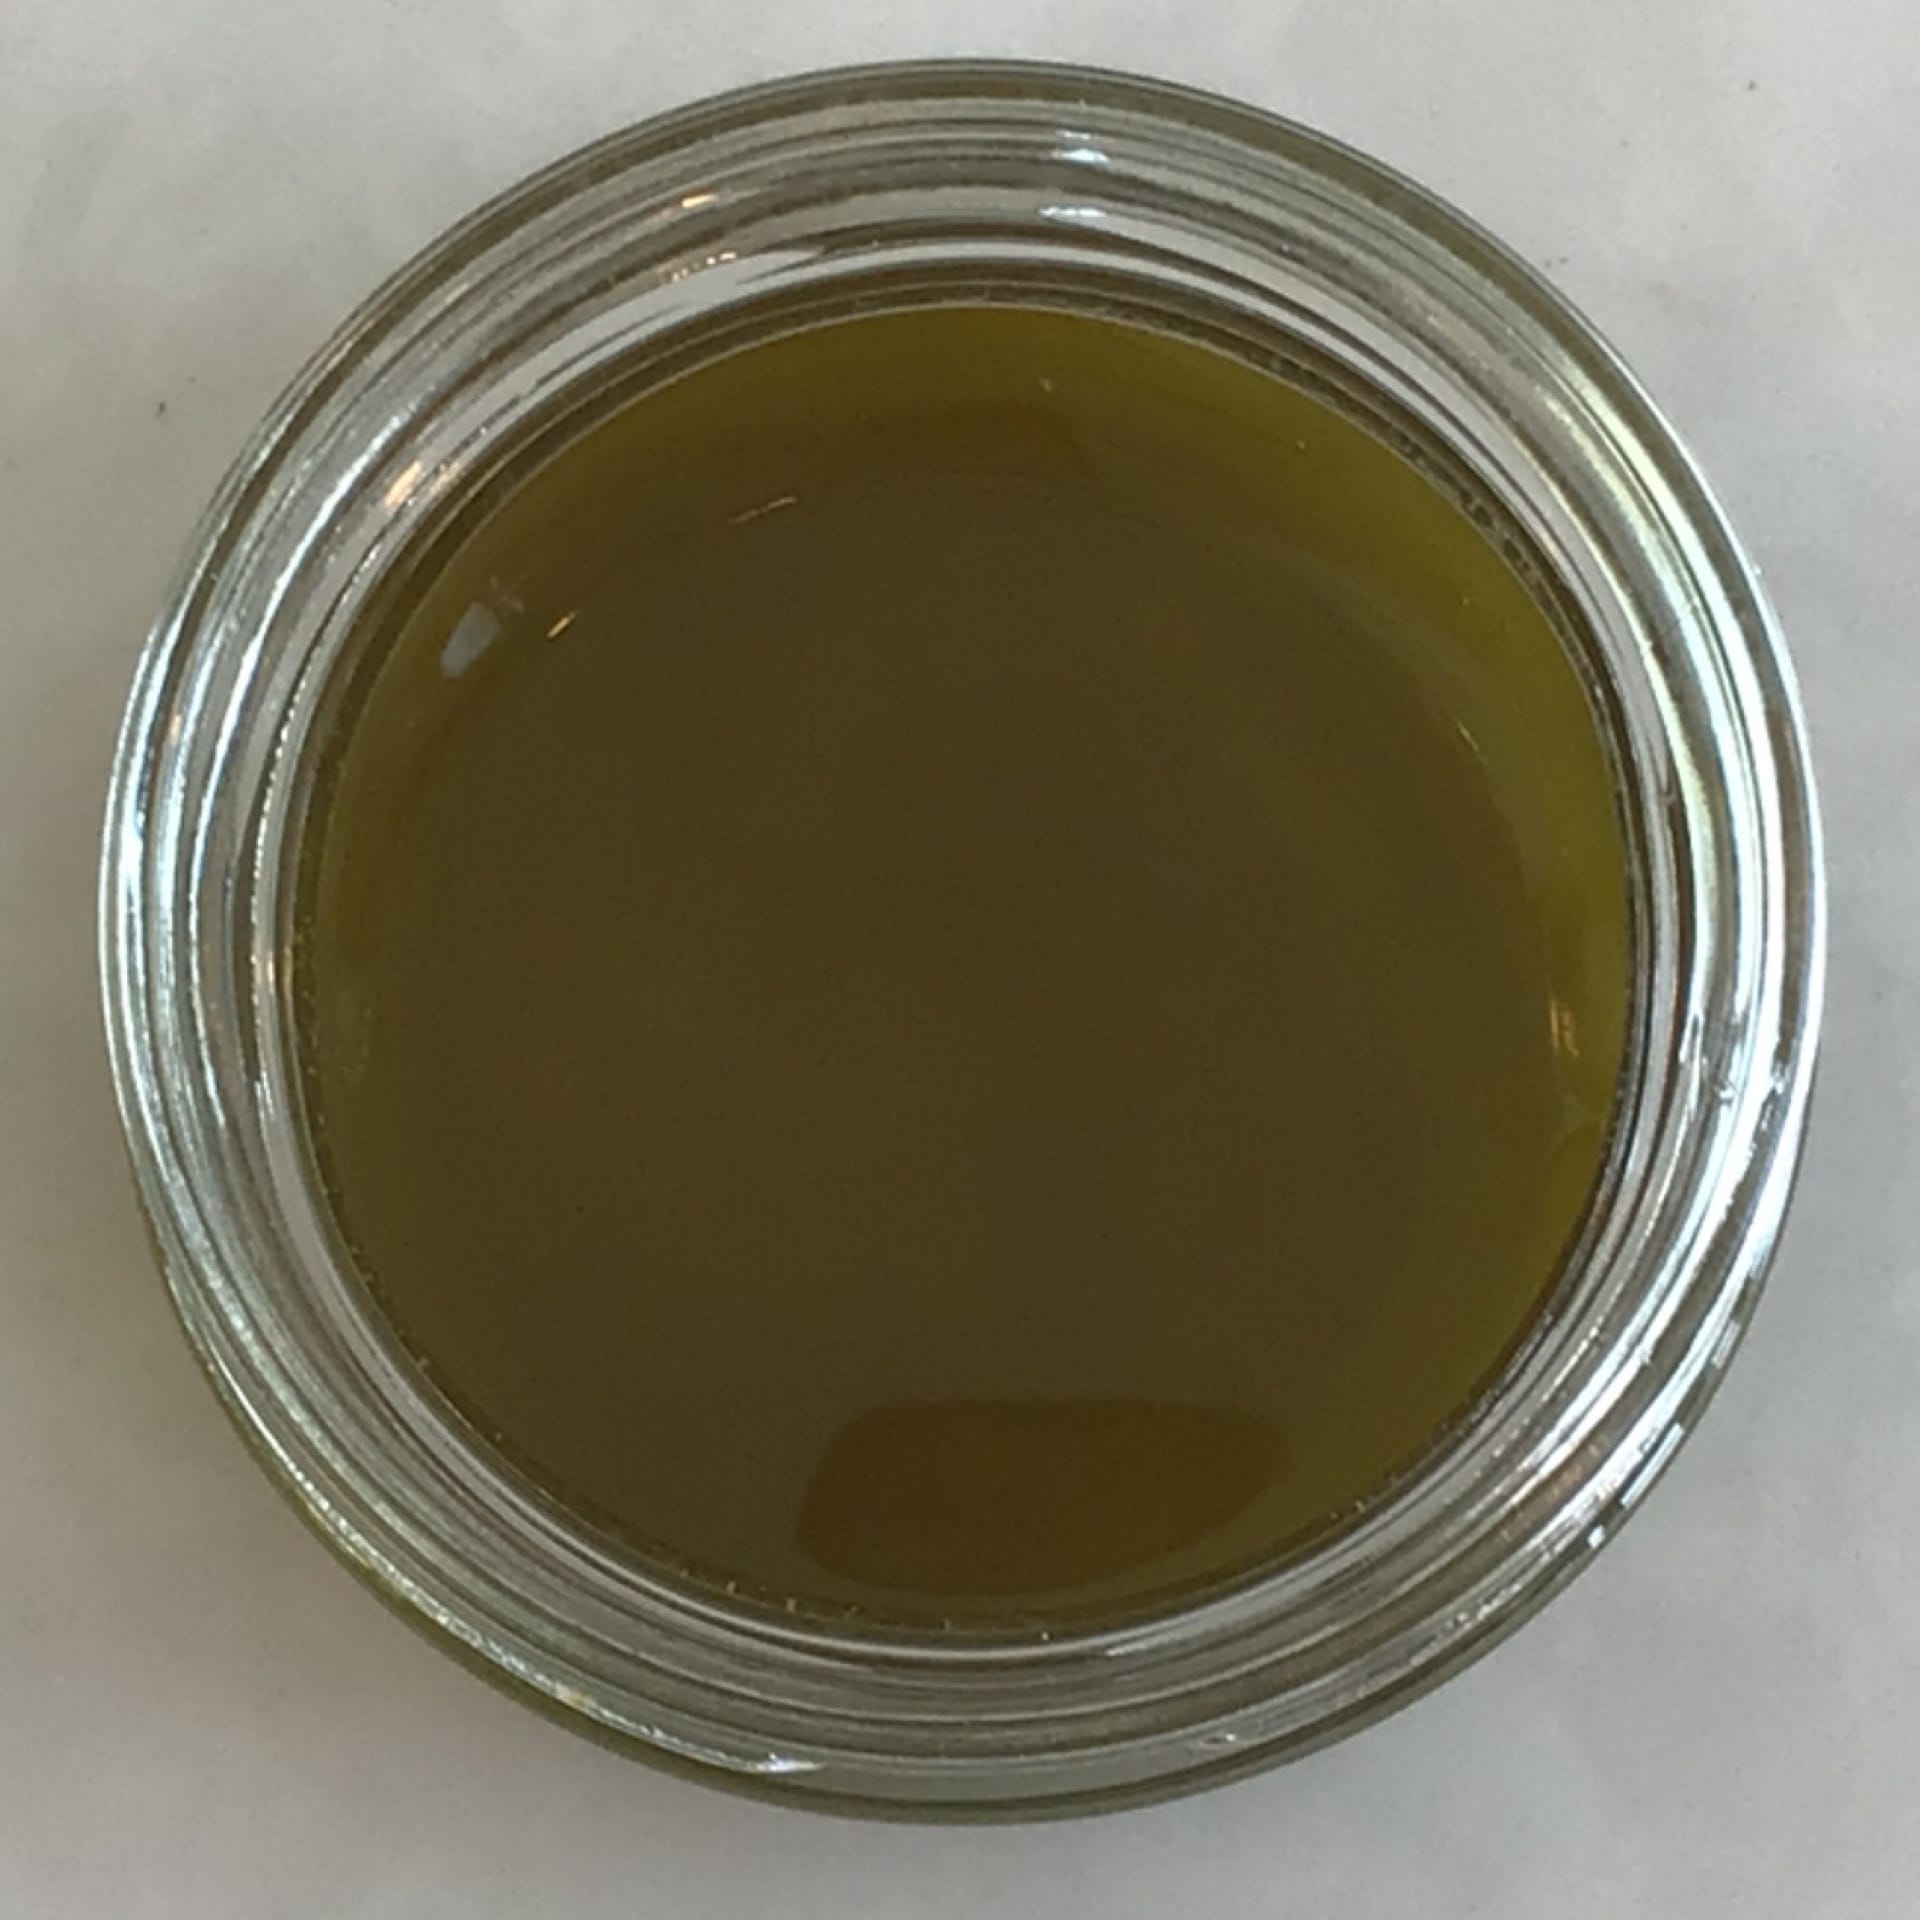 avo avocado oil